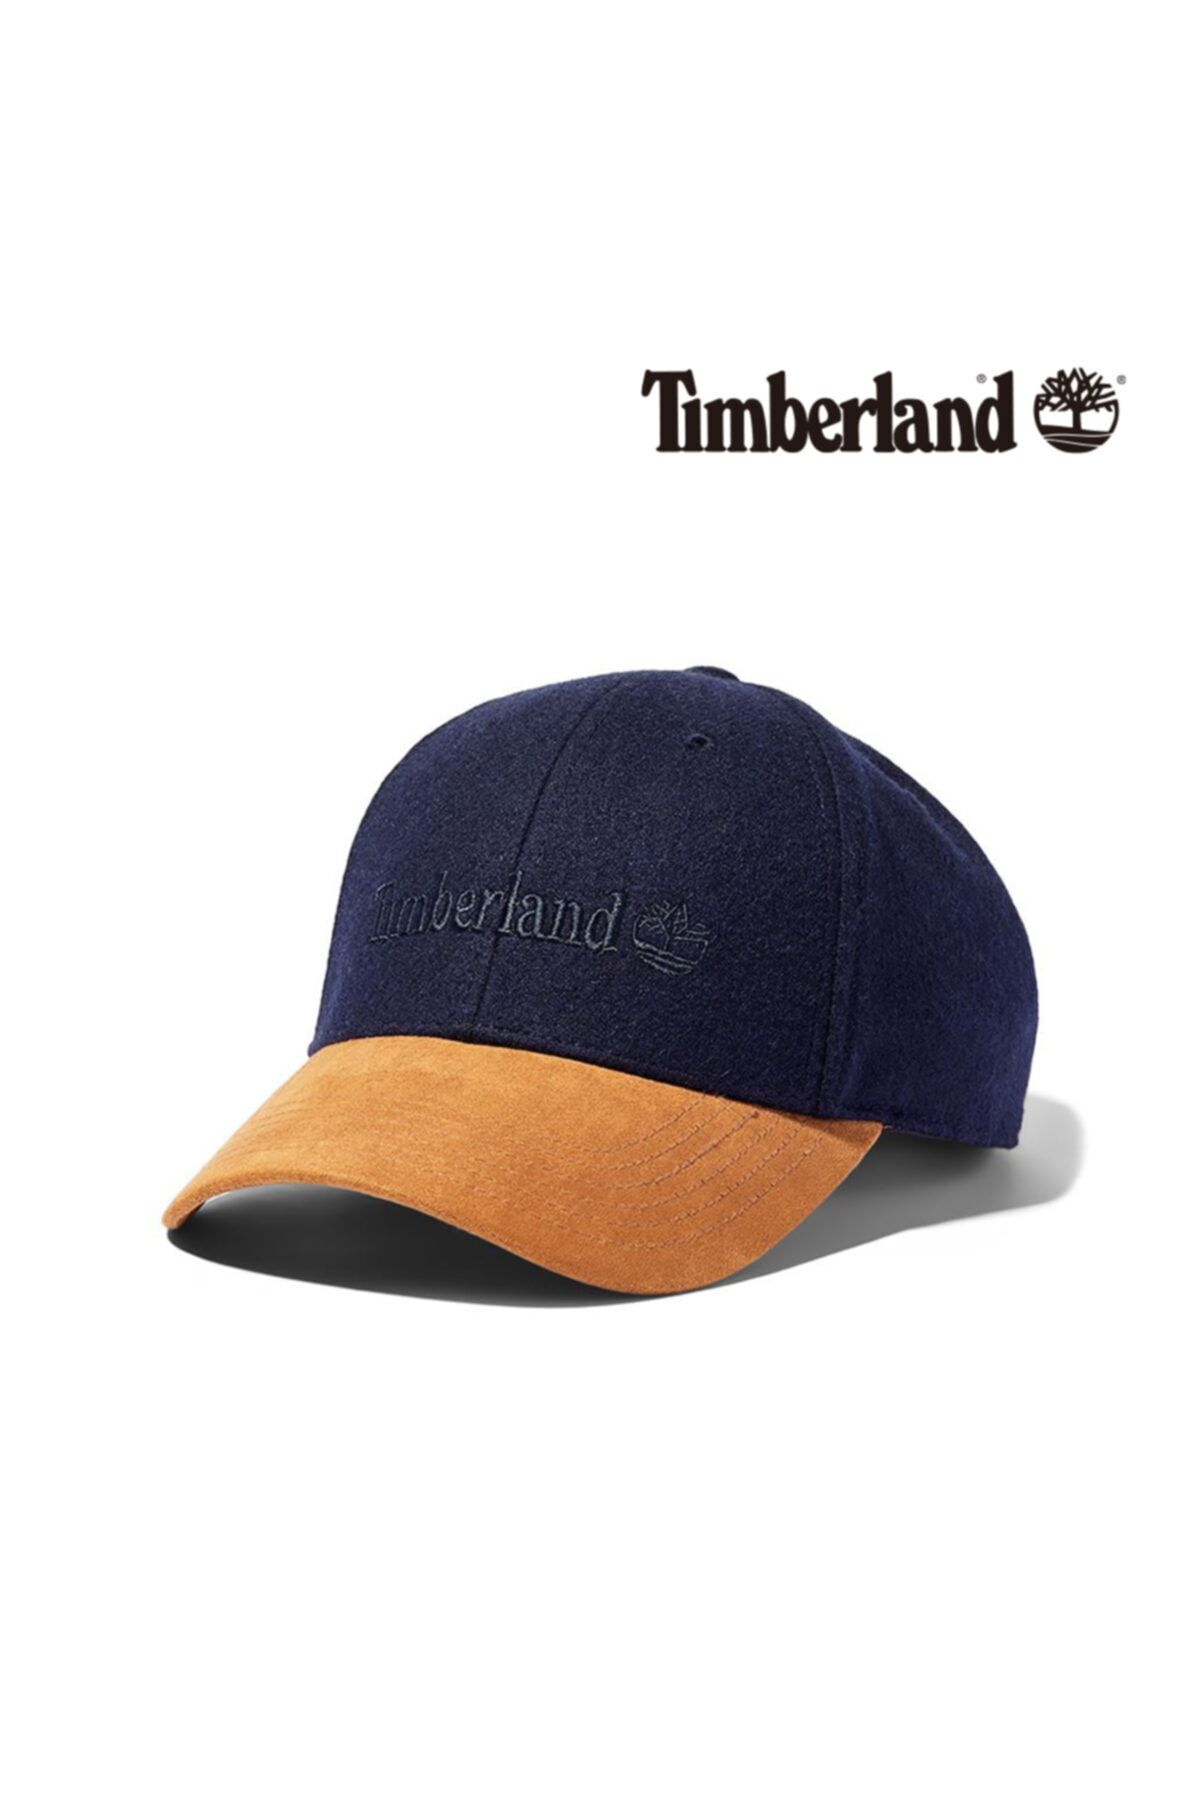 Timberland [] Kontrast Erkek Top Şapka Dark Sapphire